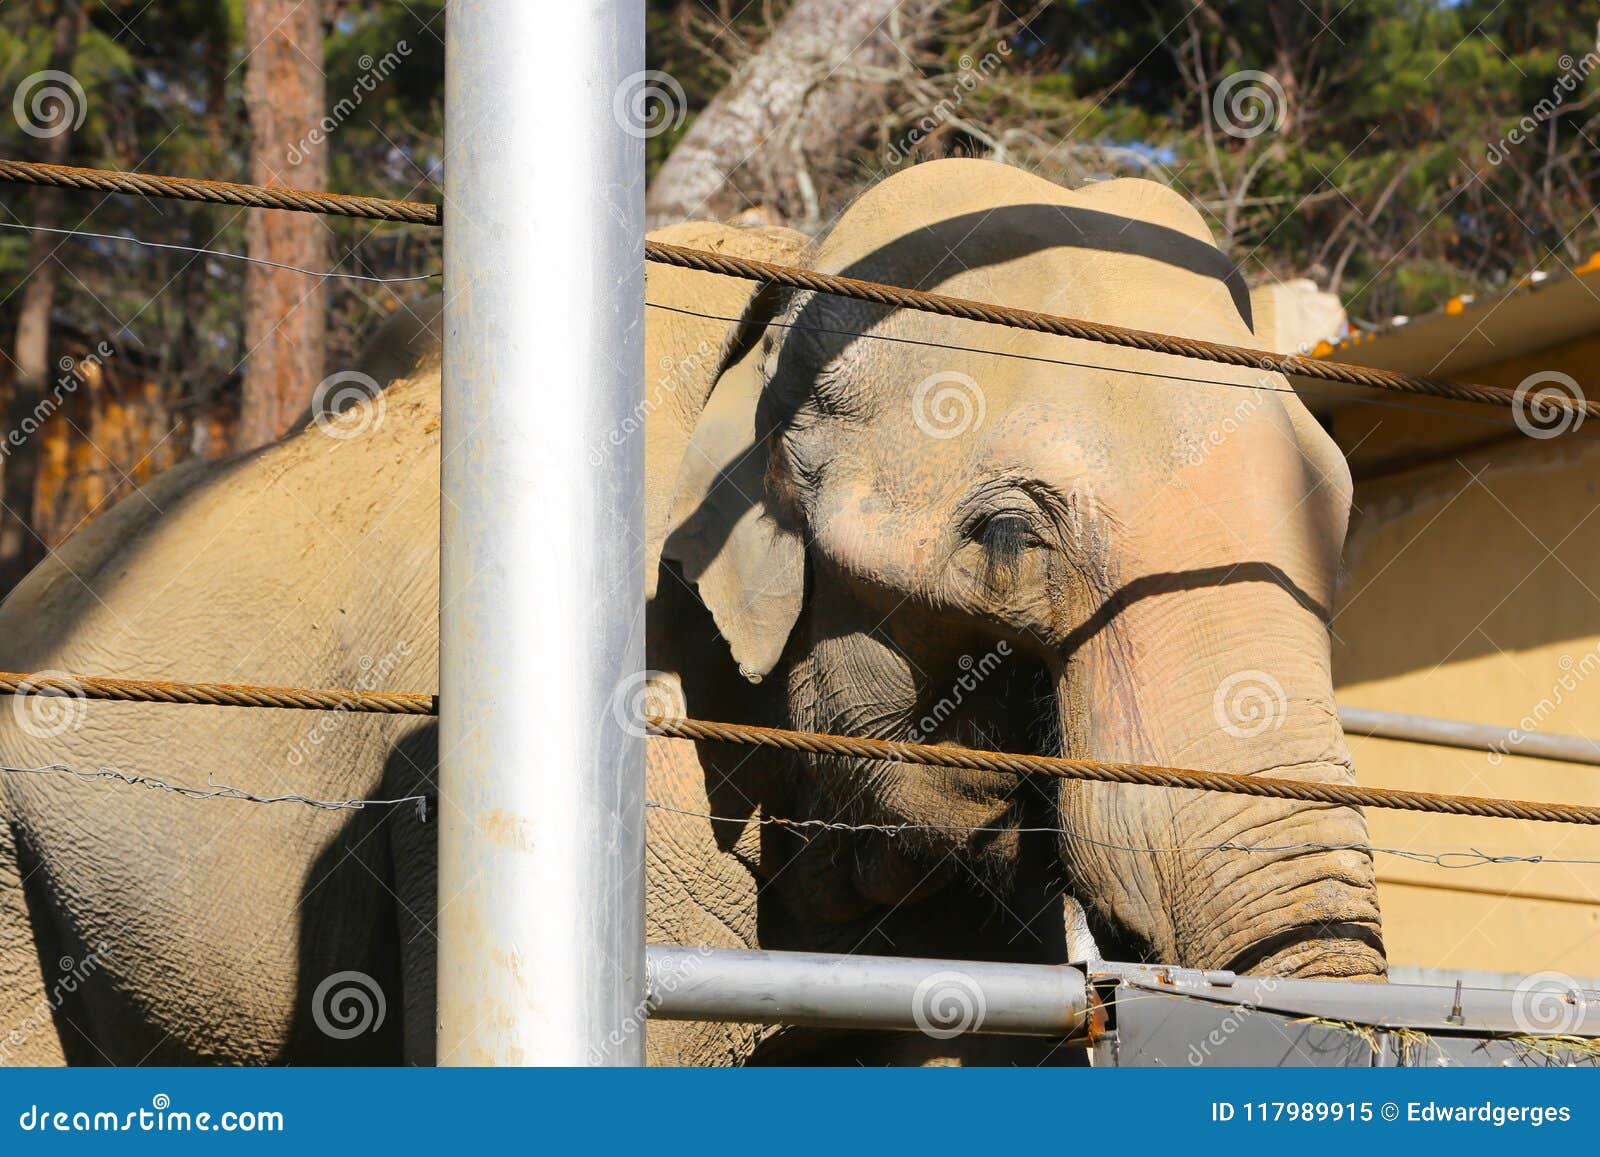 Elephant a big animal editorial image. Image of littel - 117989915